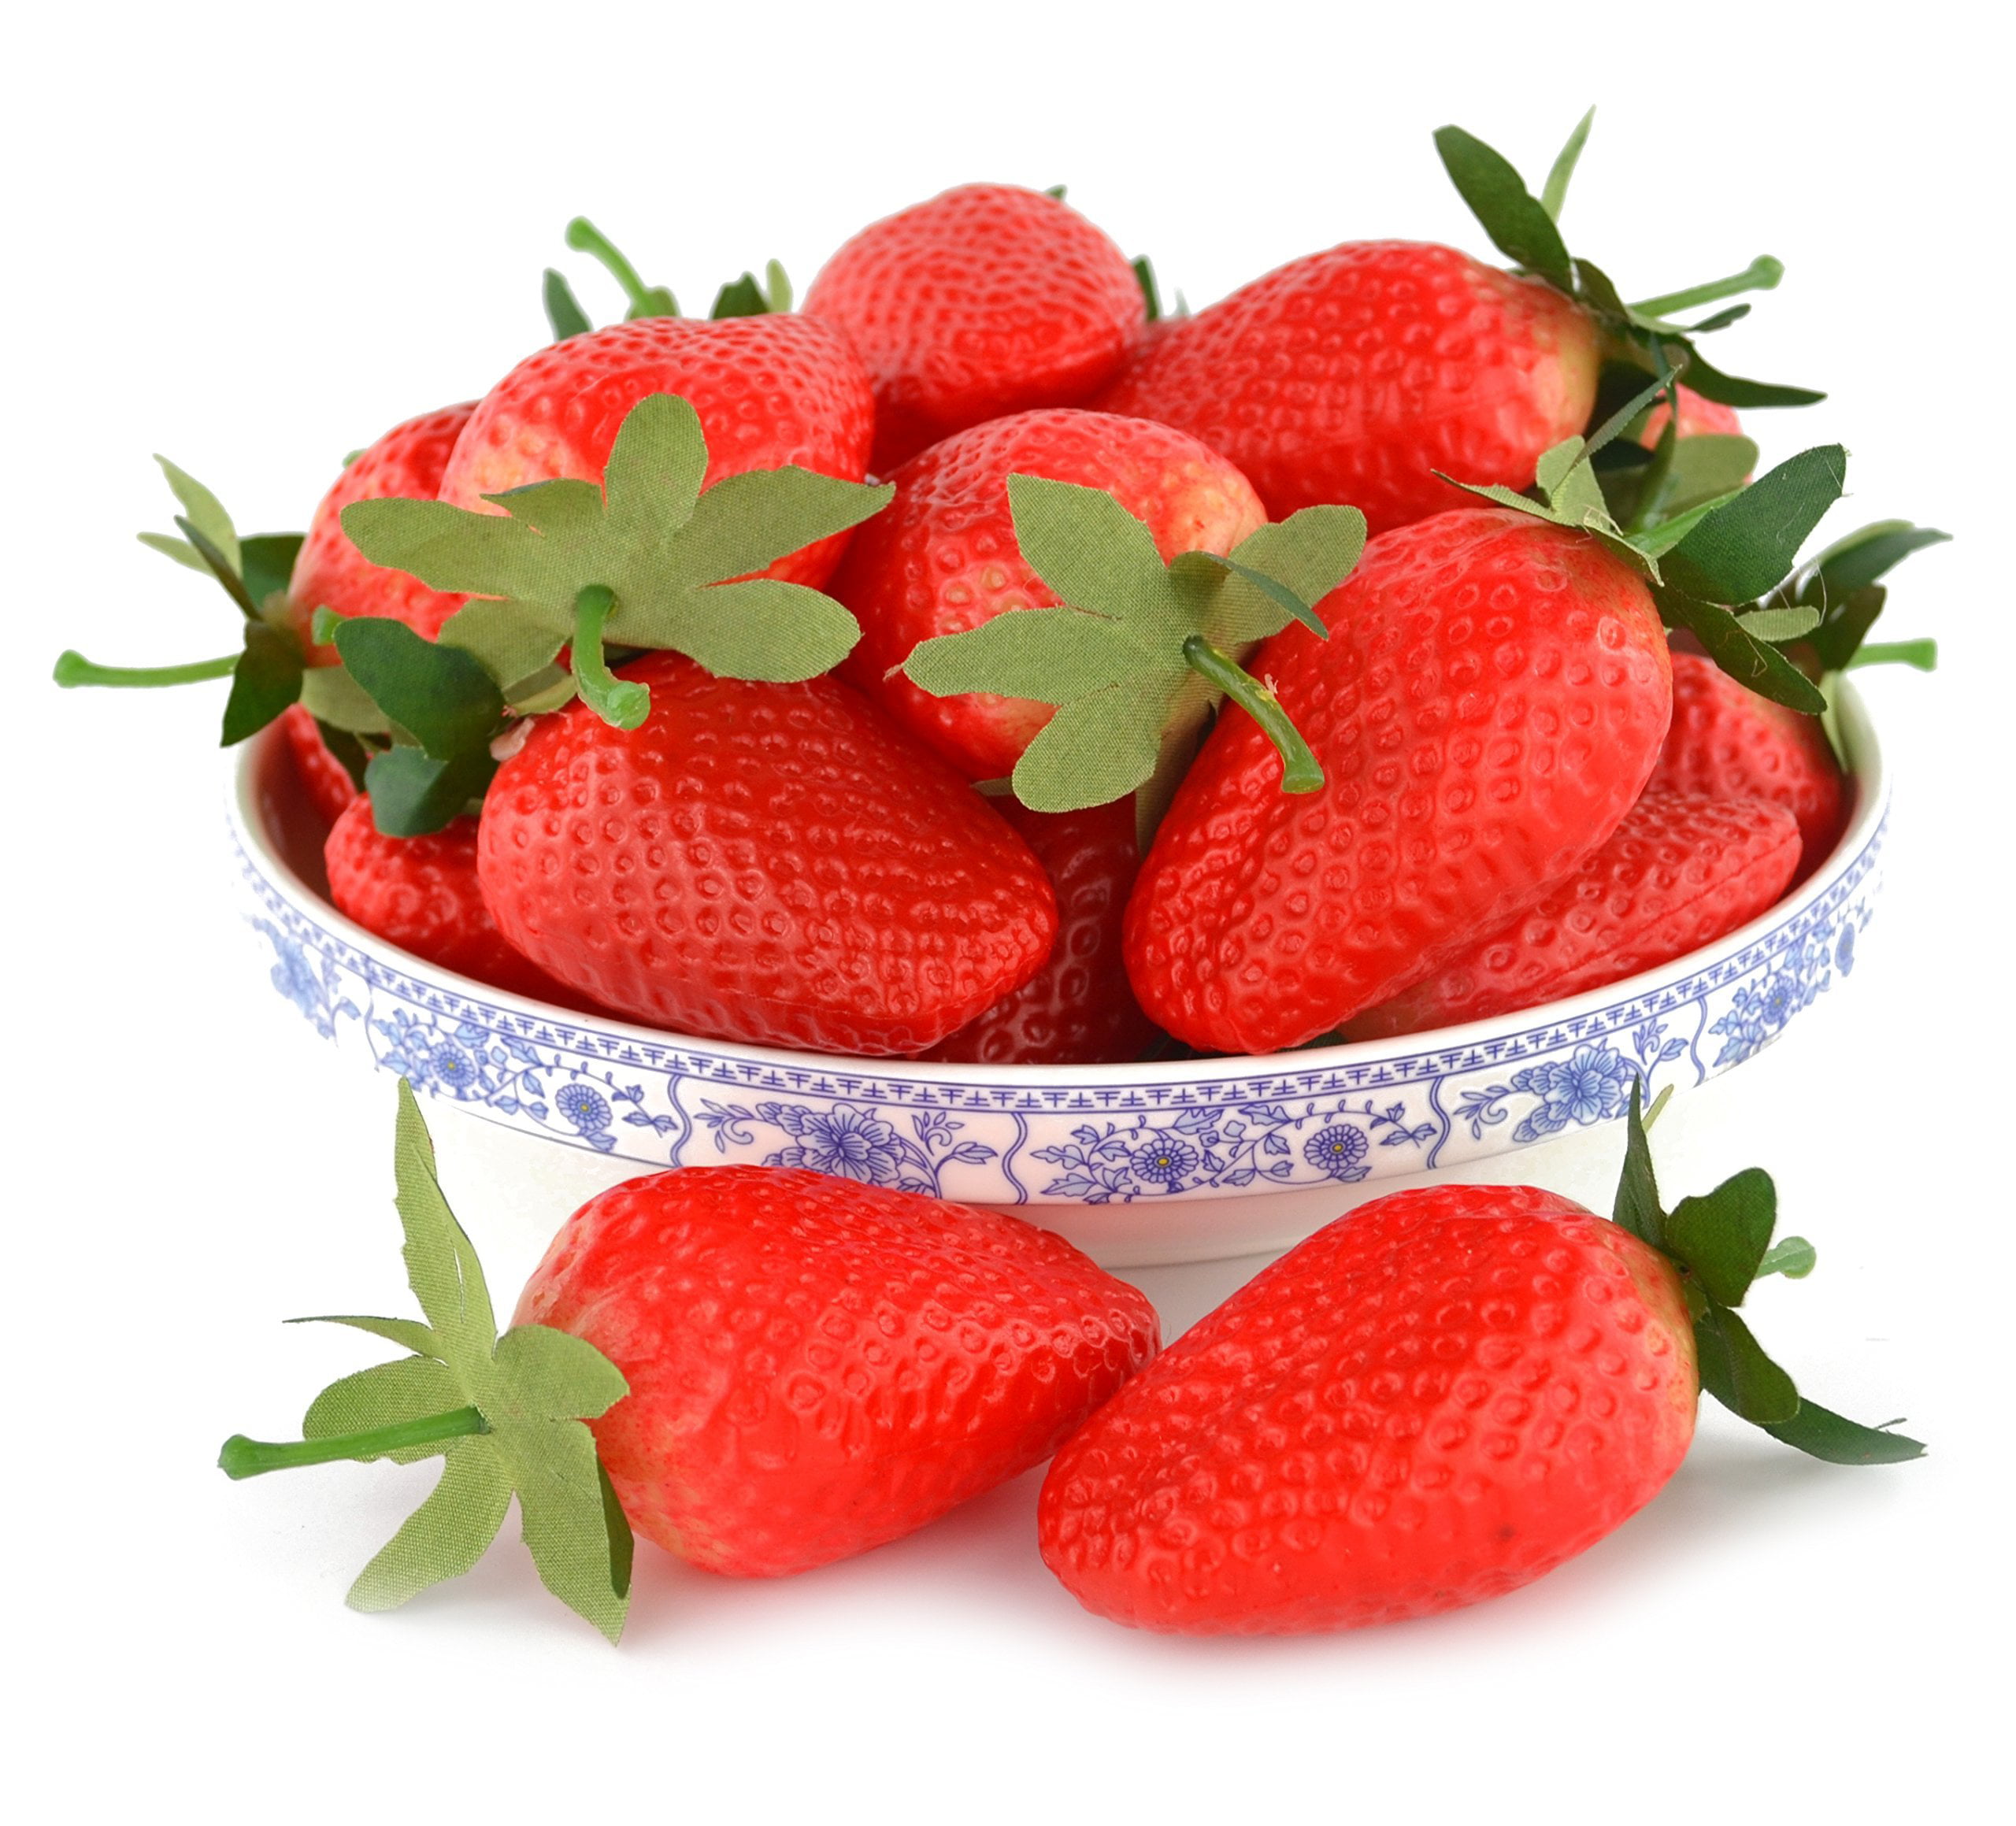 JUSTDOLIFE 24PCS Artificial Fruit Lifelike Strawberry Raspberry Fake Fruit Foam Fruit 